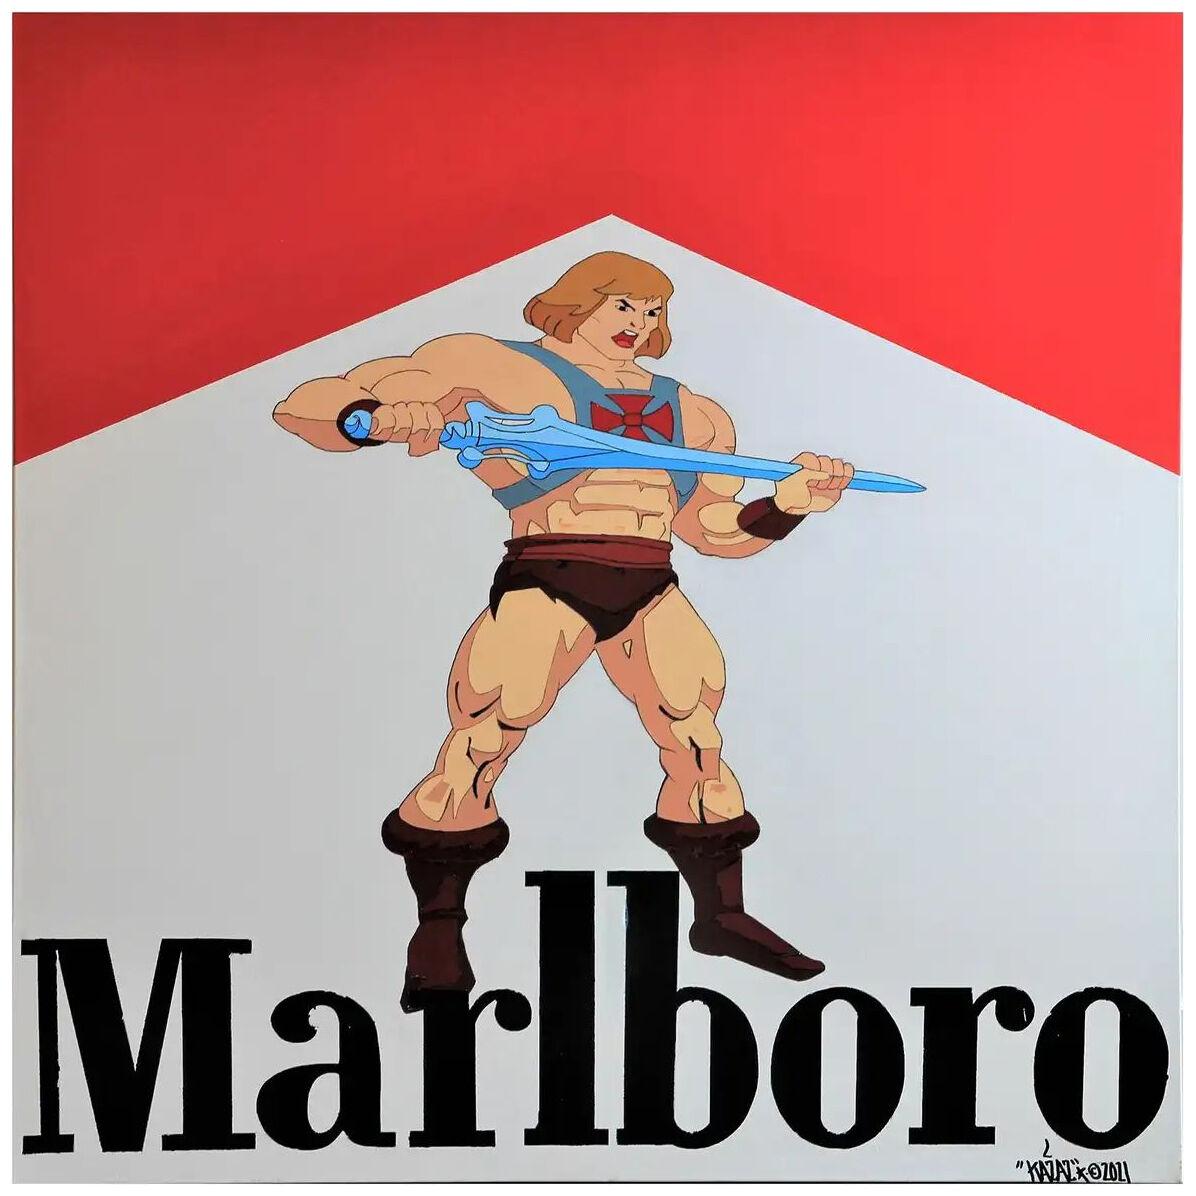 “David Before Battle” Marlboro Branding Inspired Pop Art Contemporary Painting